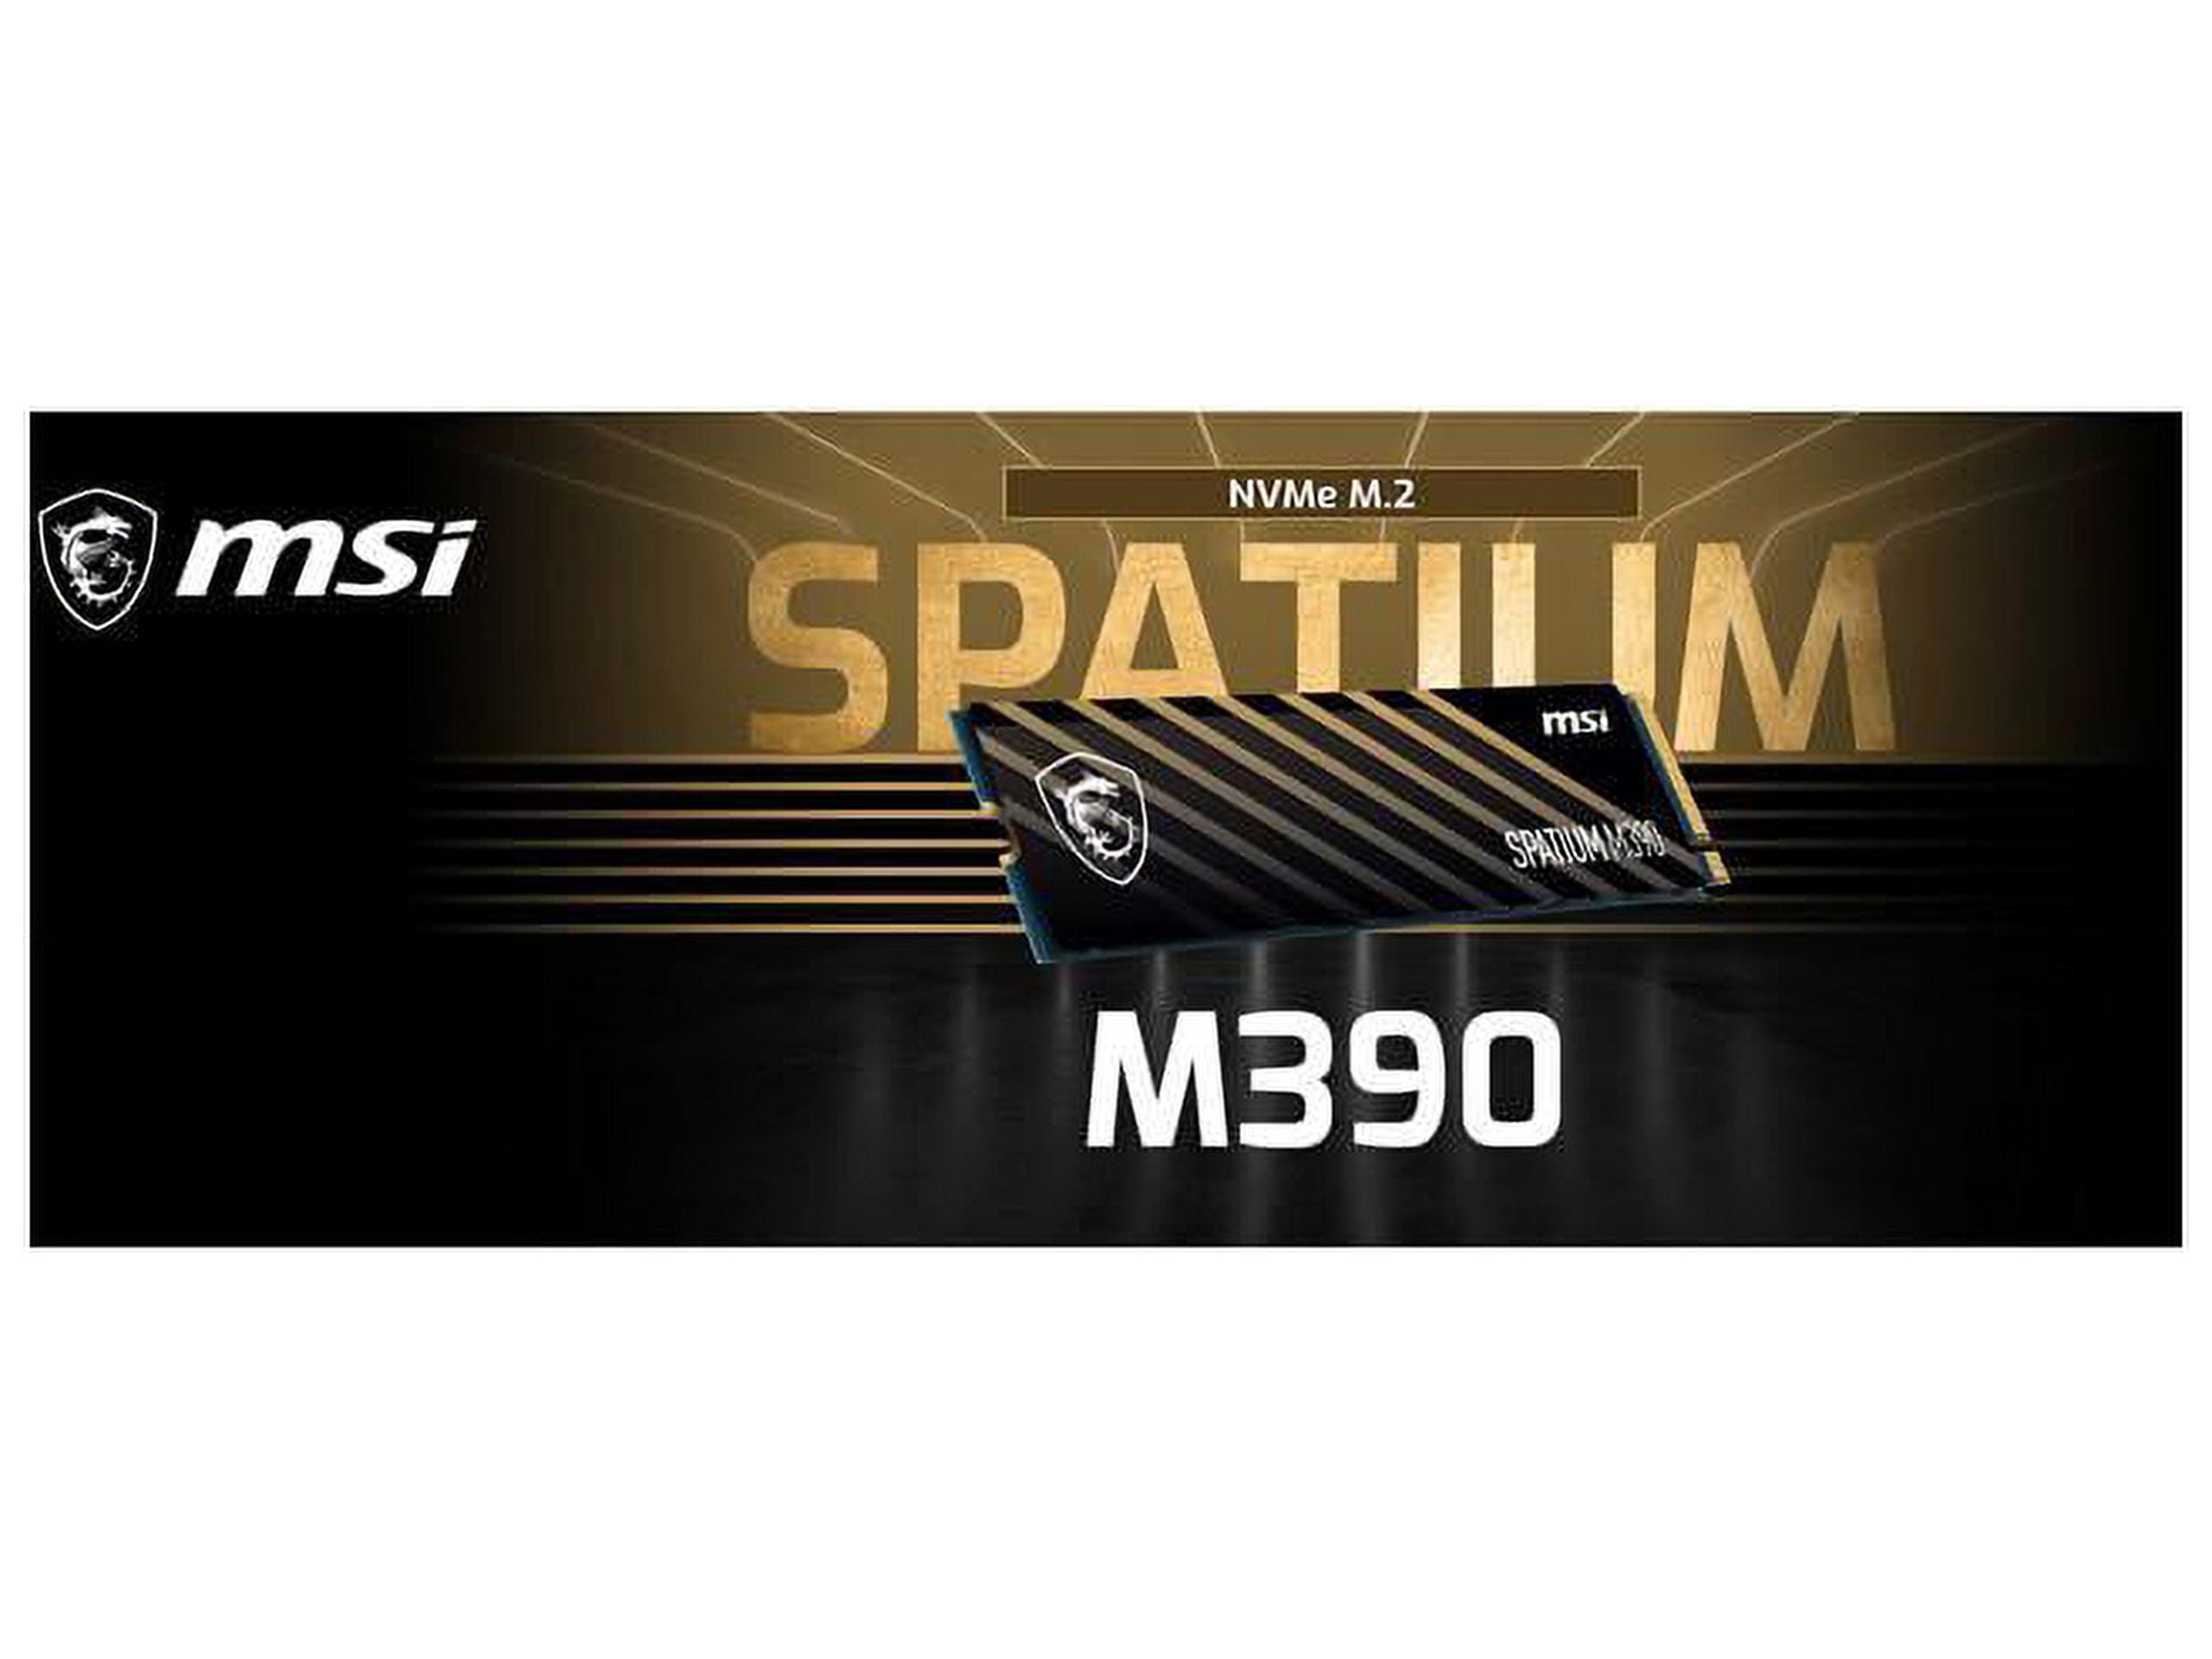 Msi - SPATIUM M390 NVMe M.2 - 1To - SSD Interne - Rue du Commerce